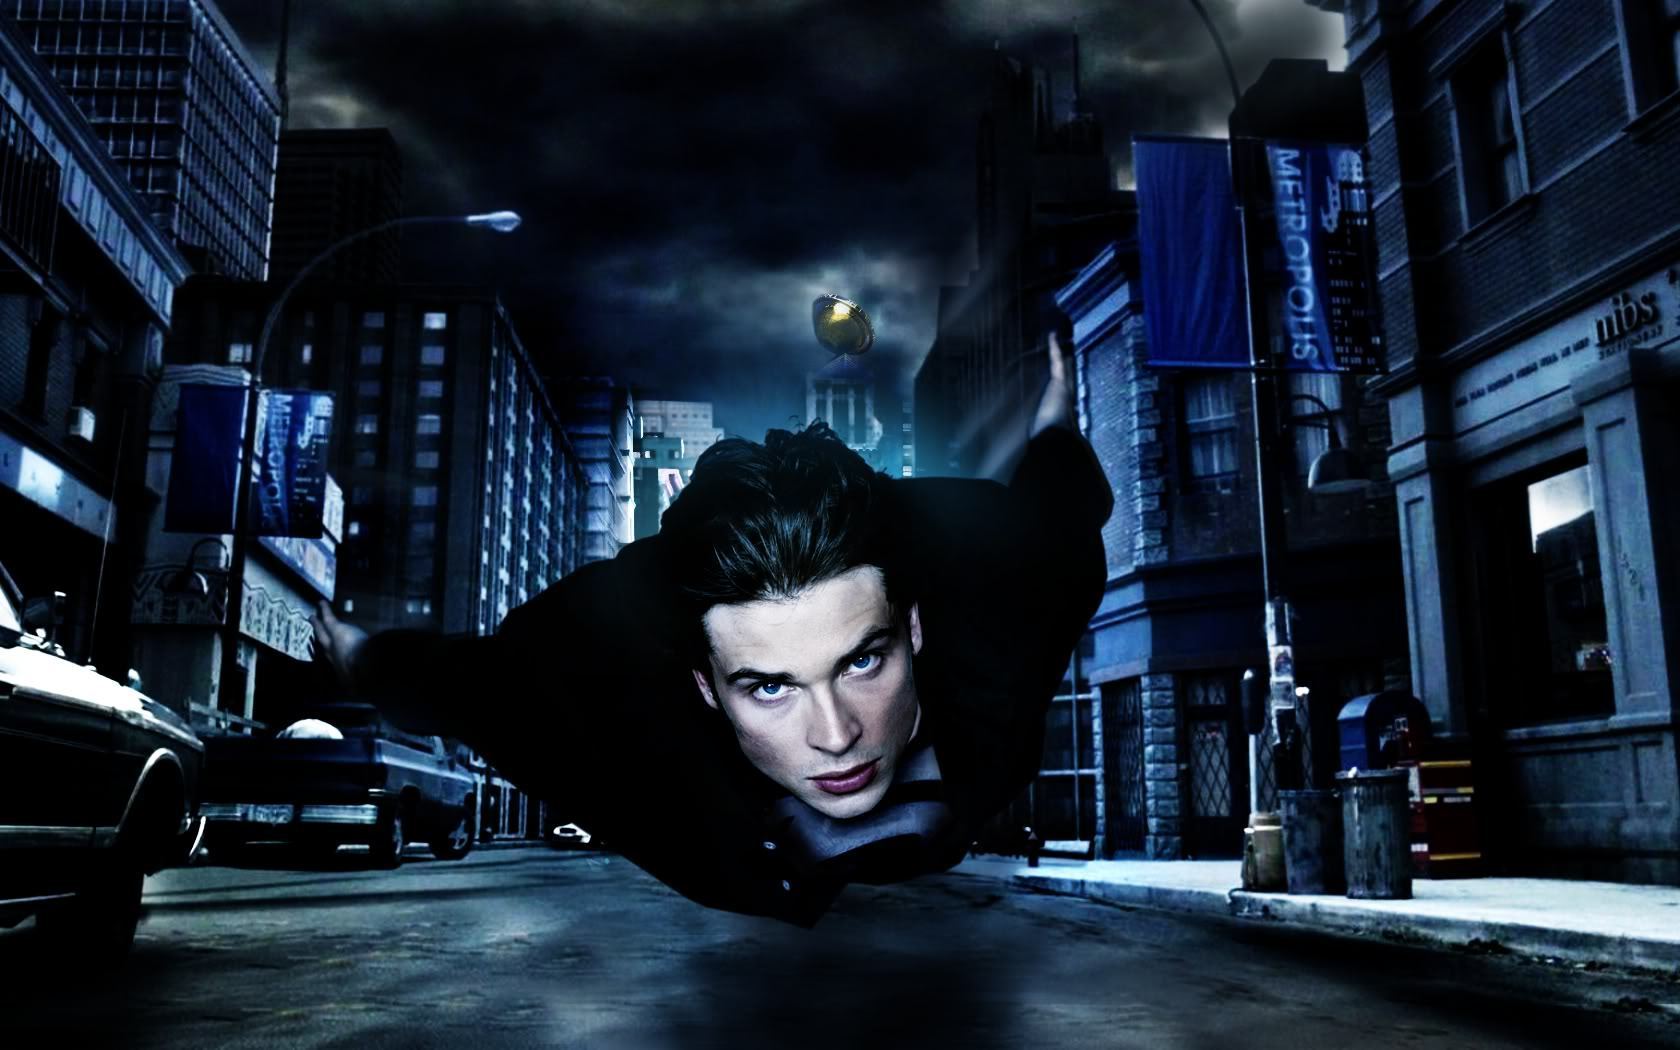 Smallville Wallpaper HD